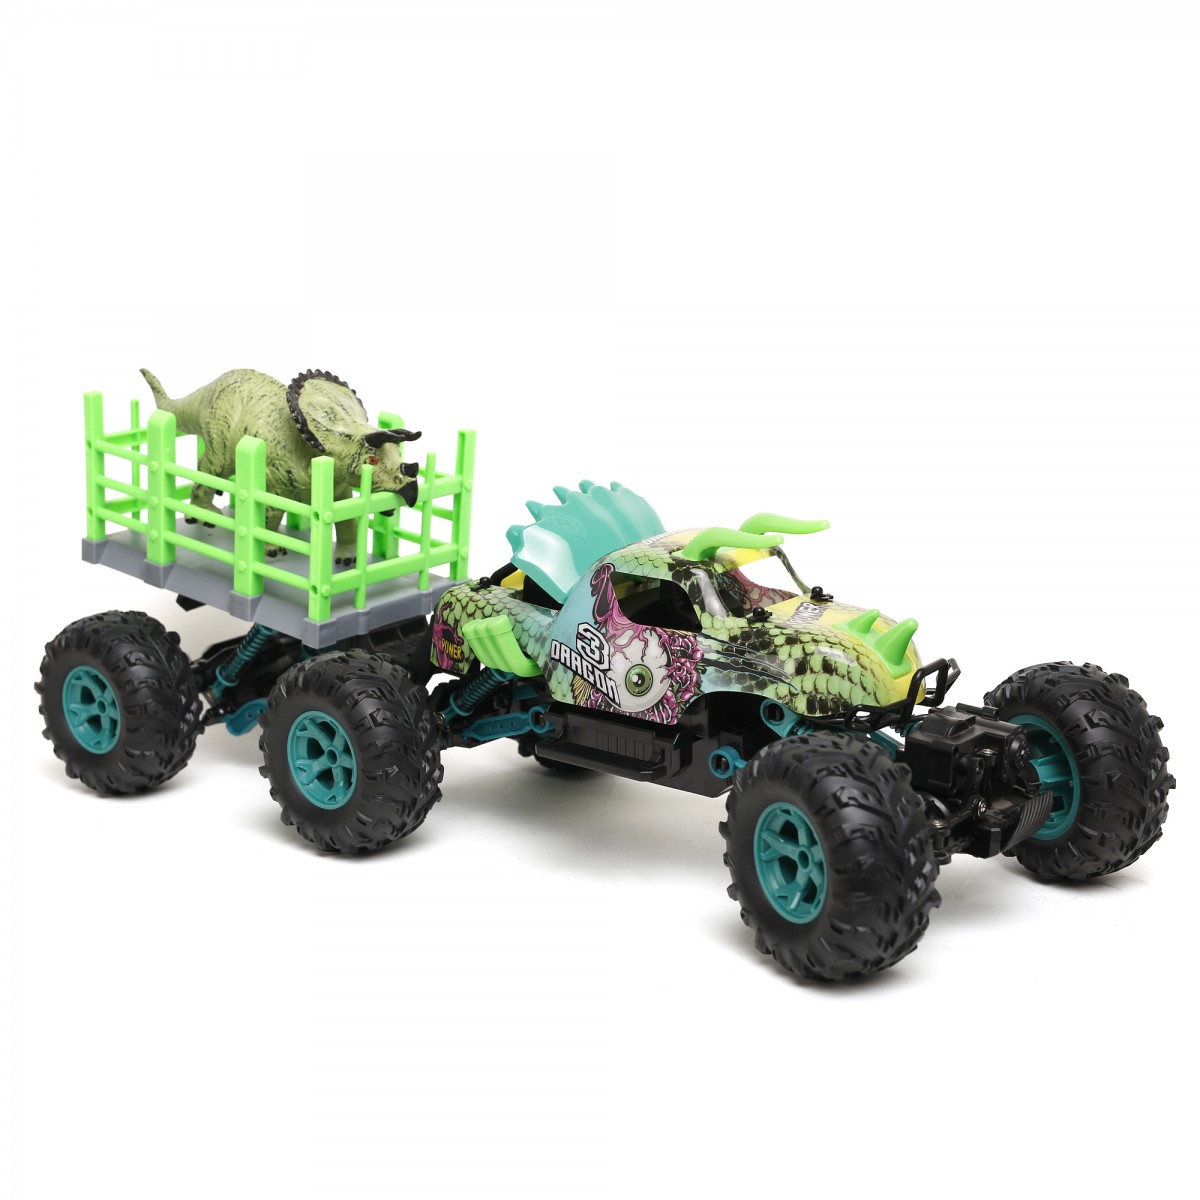 Ralleyz 2.4G 1:14 Dinosaur Truck Green 8Y+